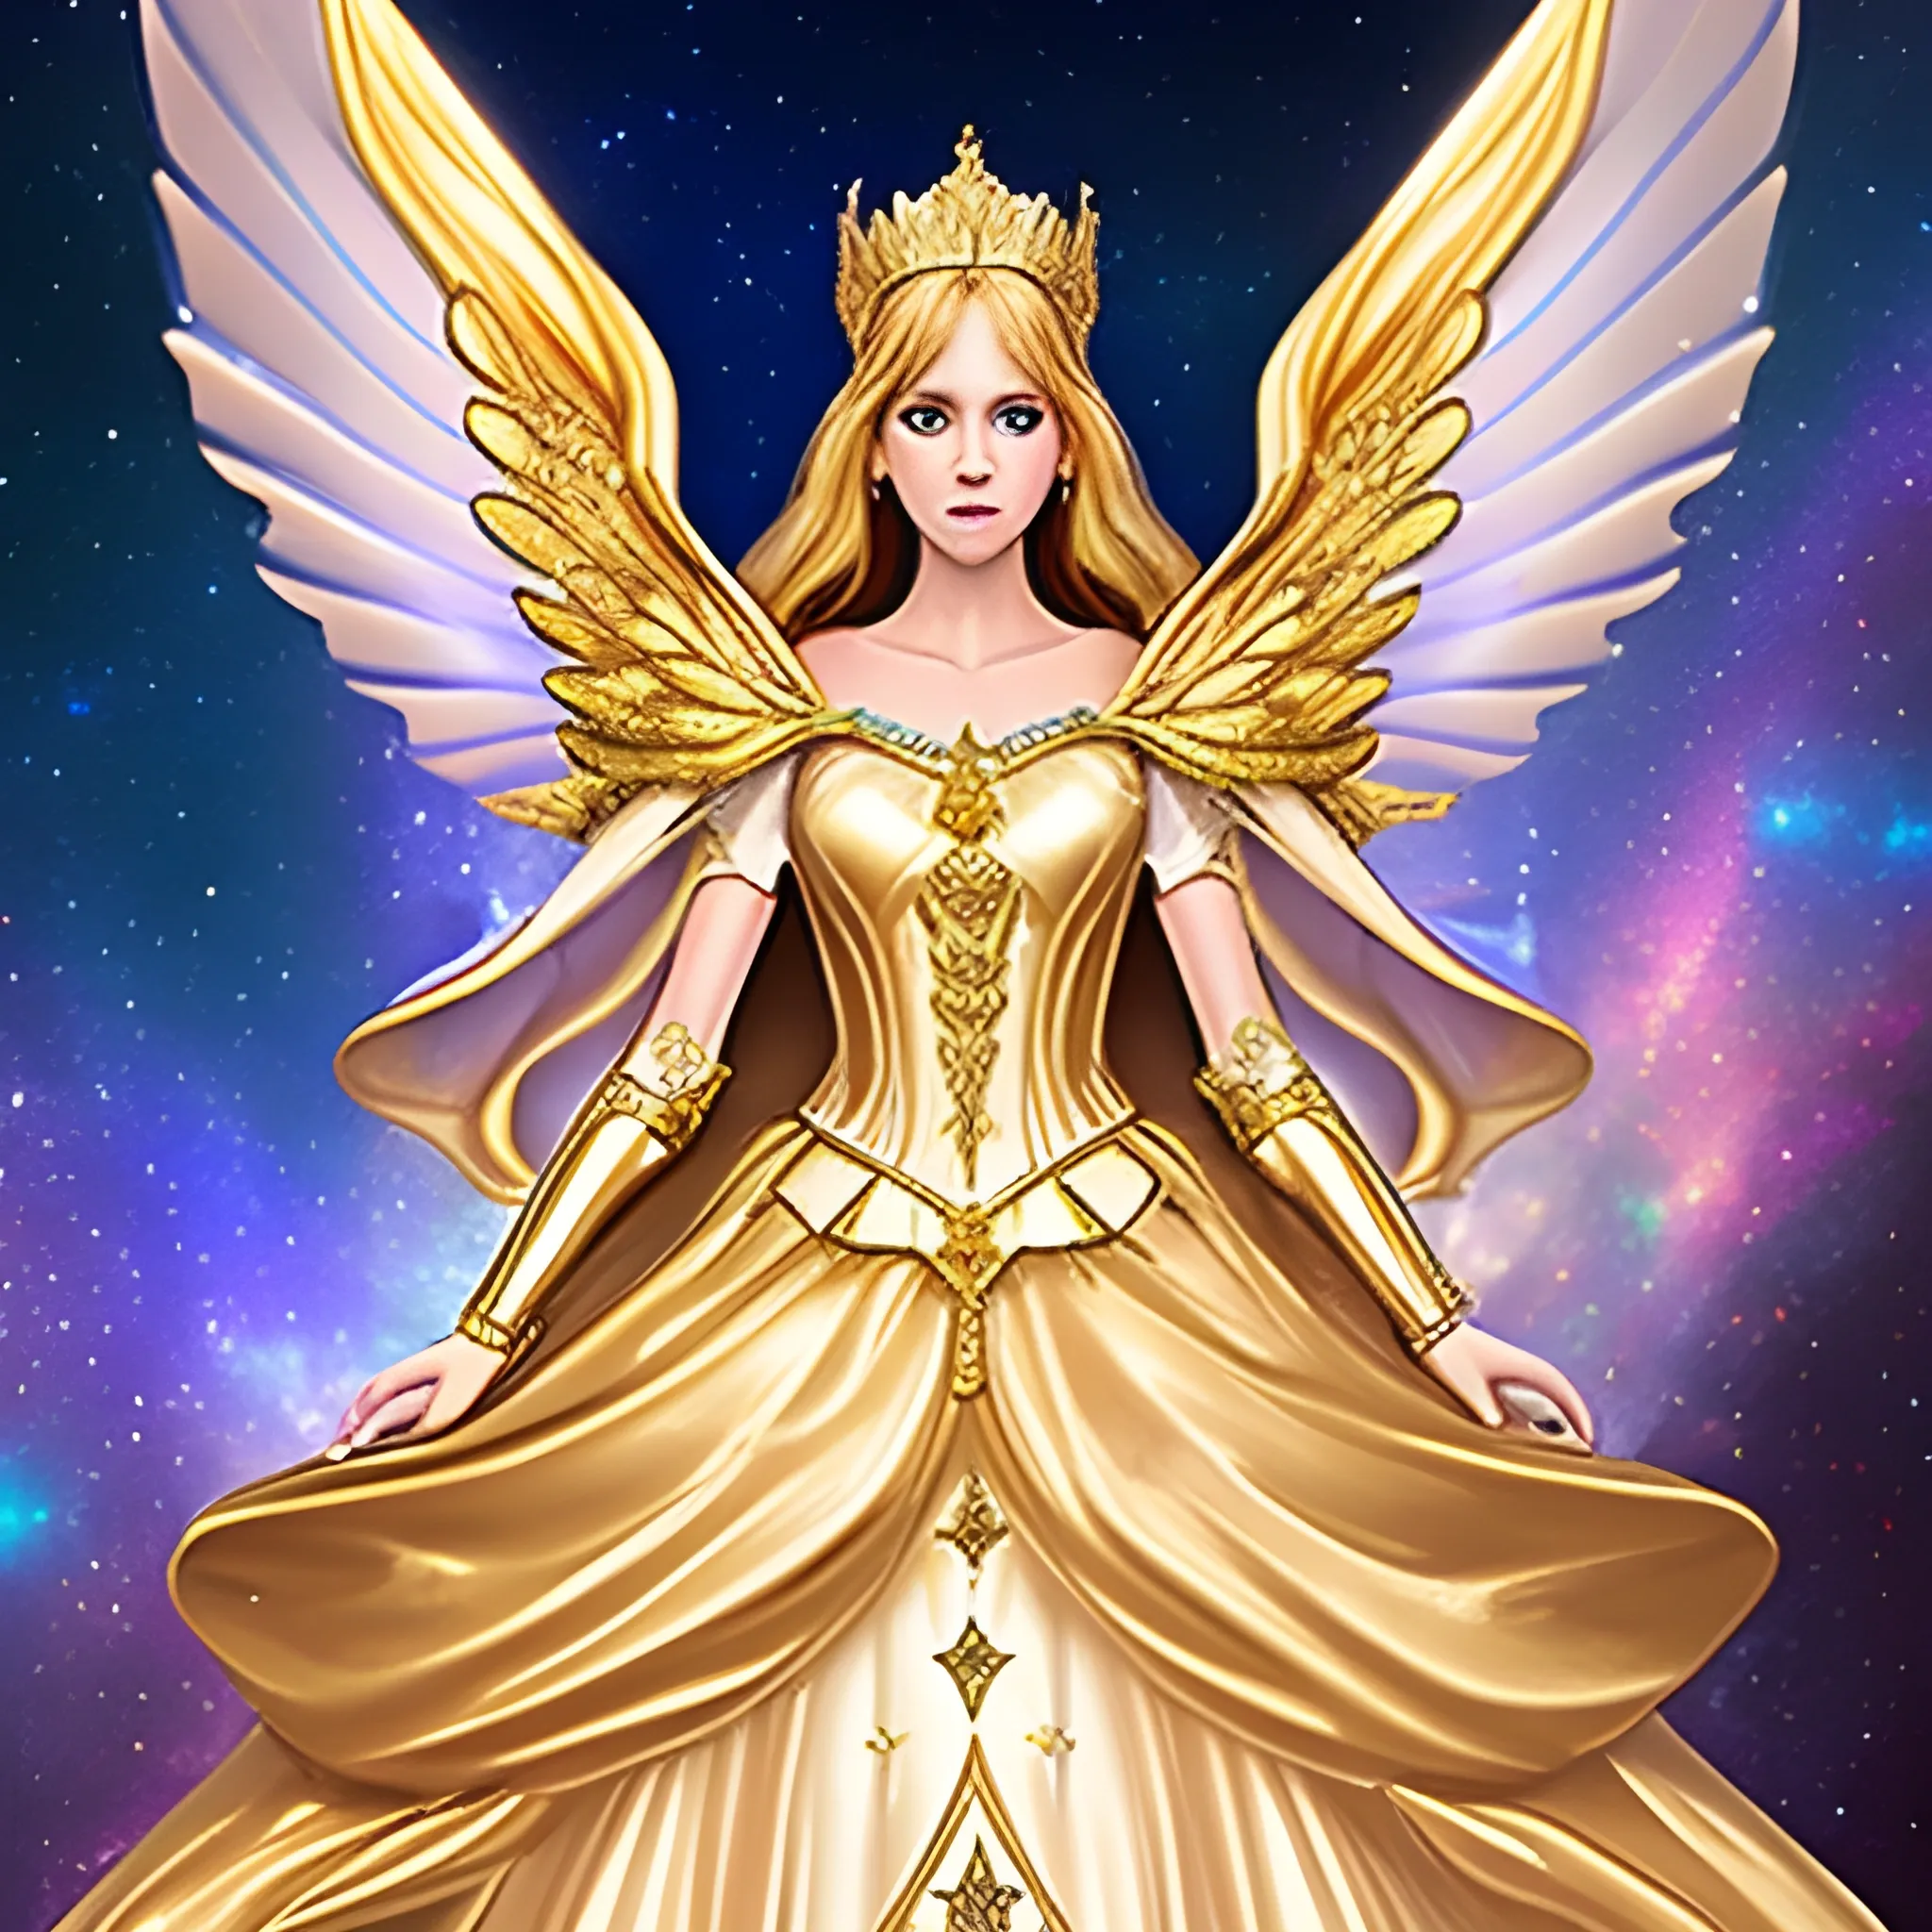 Golden galaxy goddess Angel fairy Queen princess dream wedding dress with cape and high collar warrior moon goddess armor majestic supreme powerful